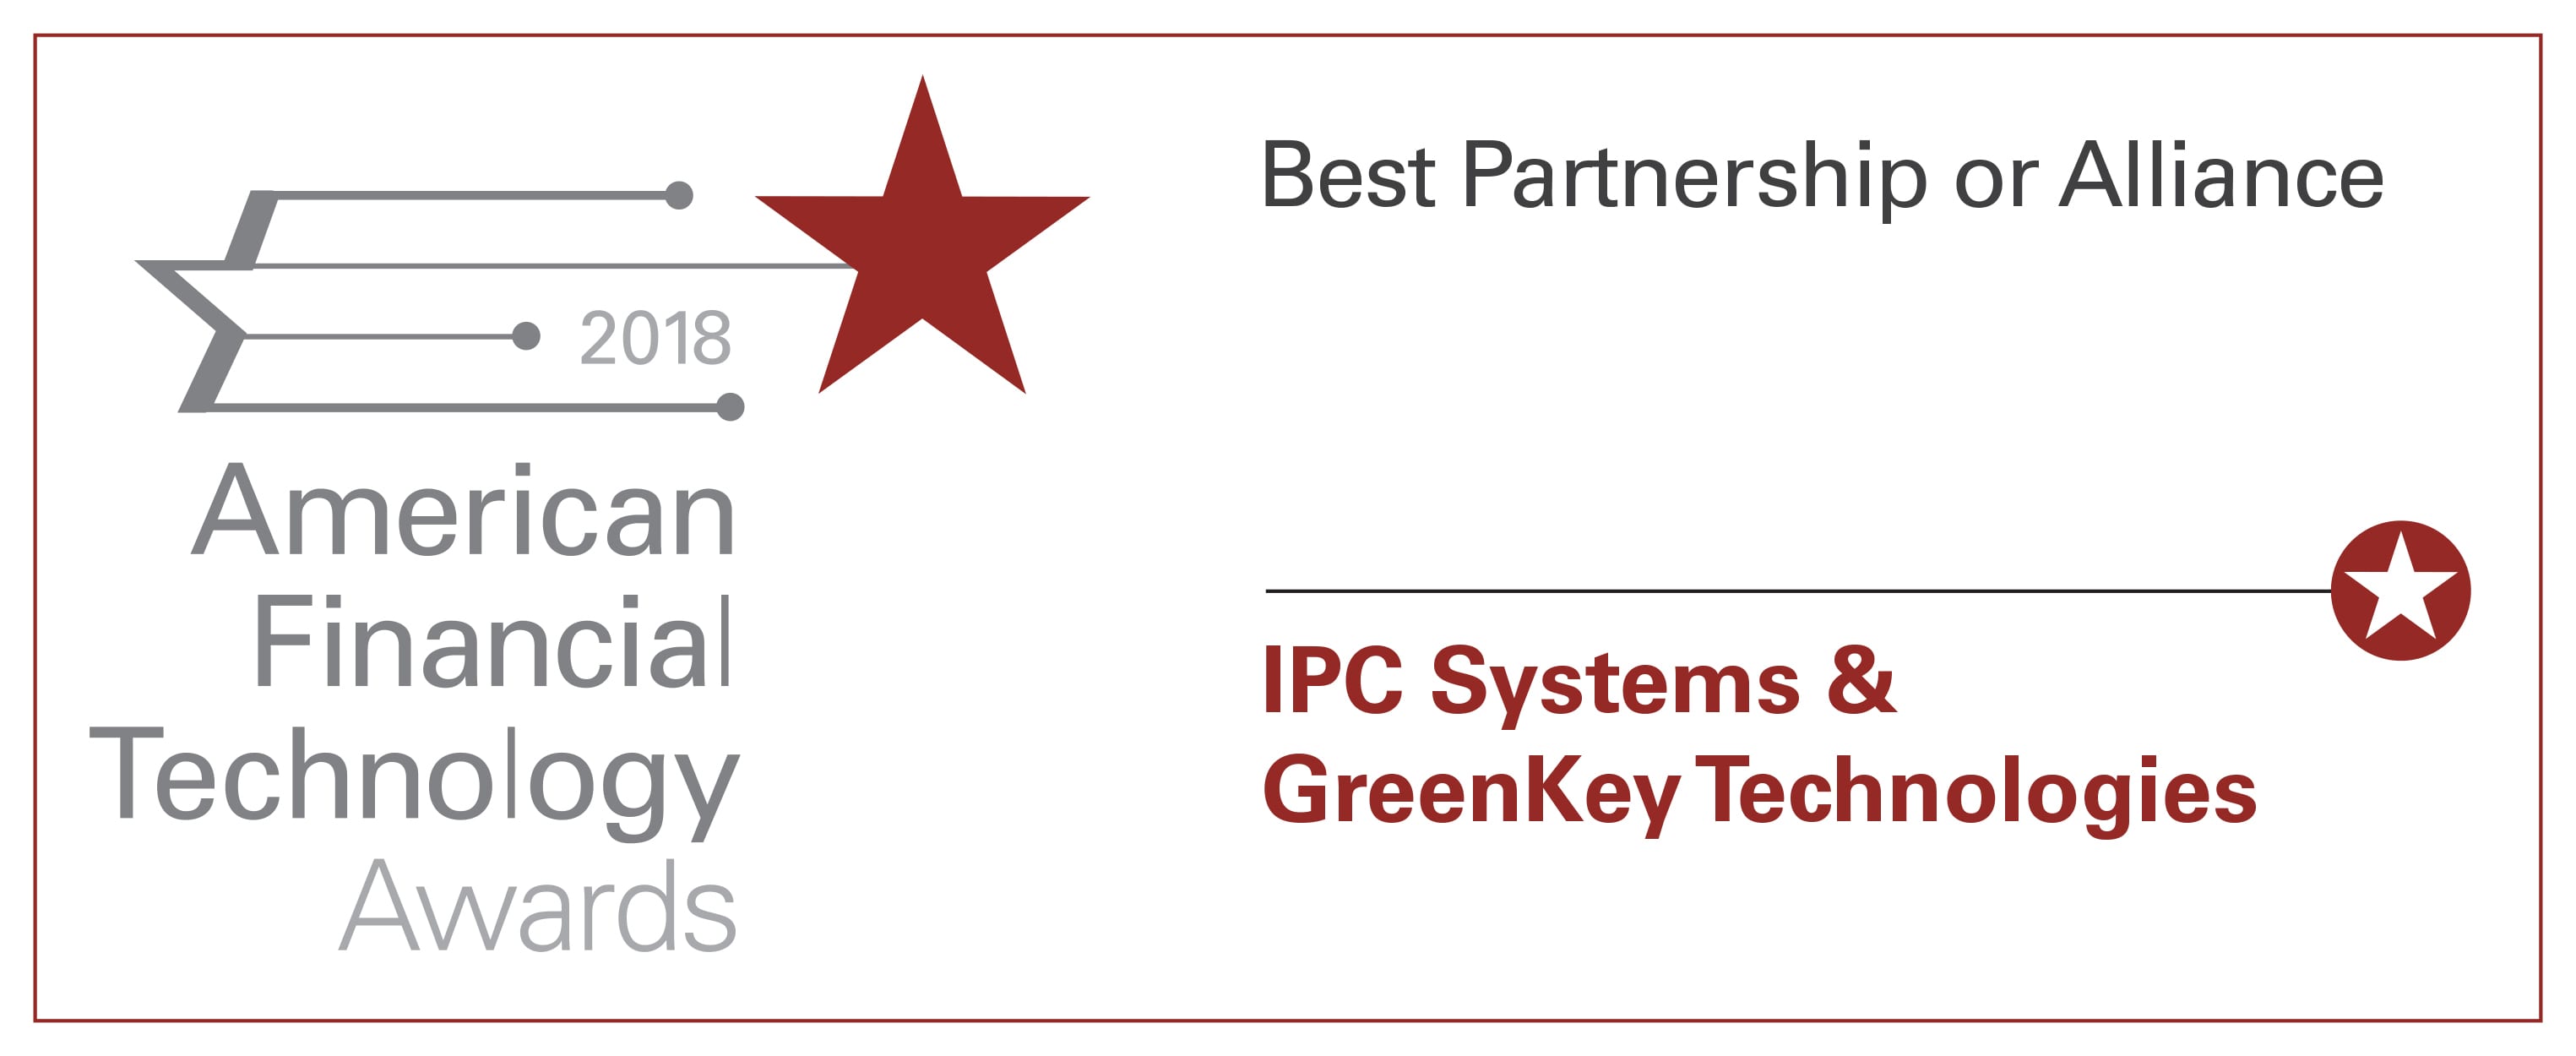 “Best Partnership or Alliance” – IPC Systems & GreenKey Technologies, AFTAs 2018